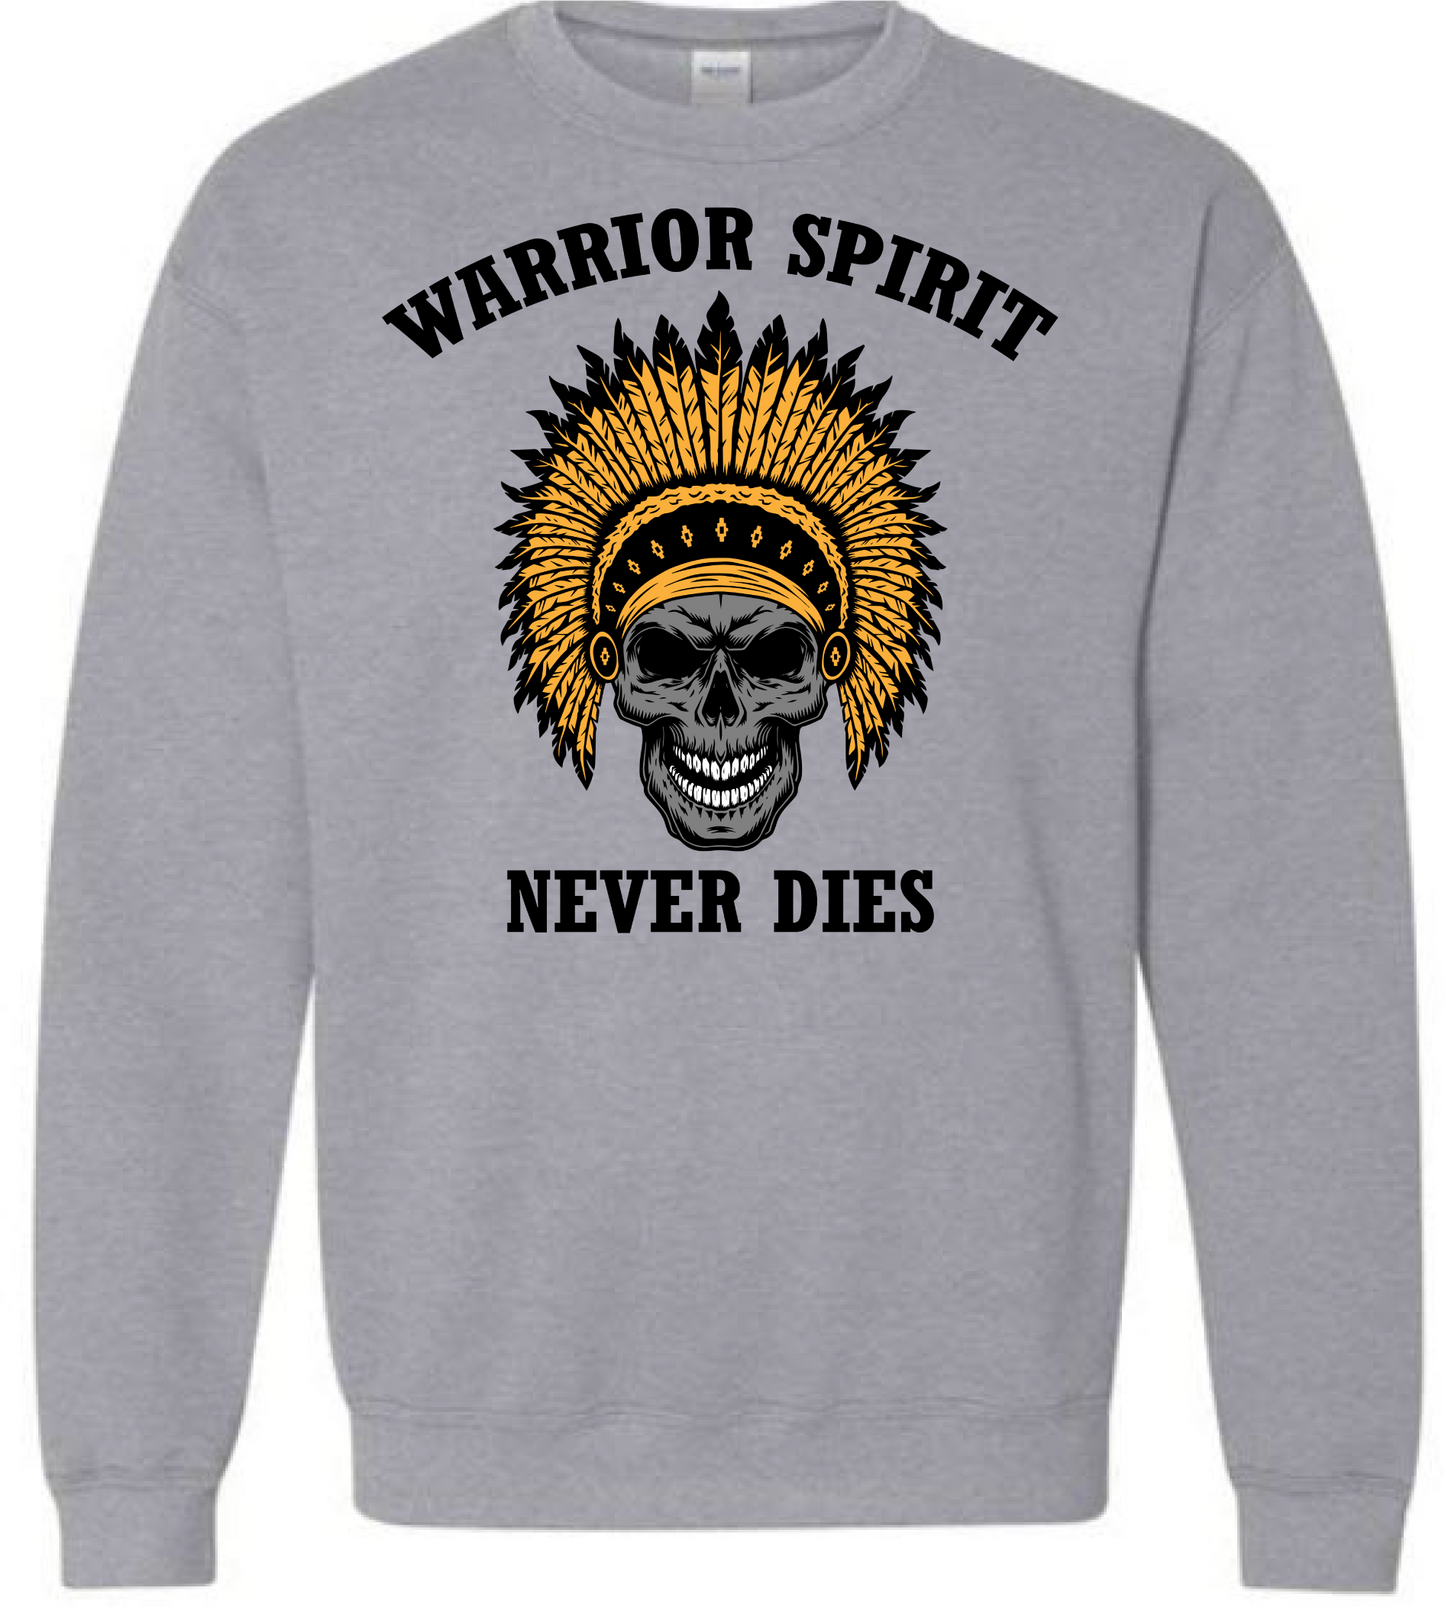 Warriors Spirit Sweatshirt